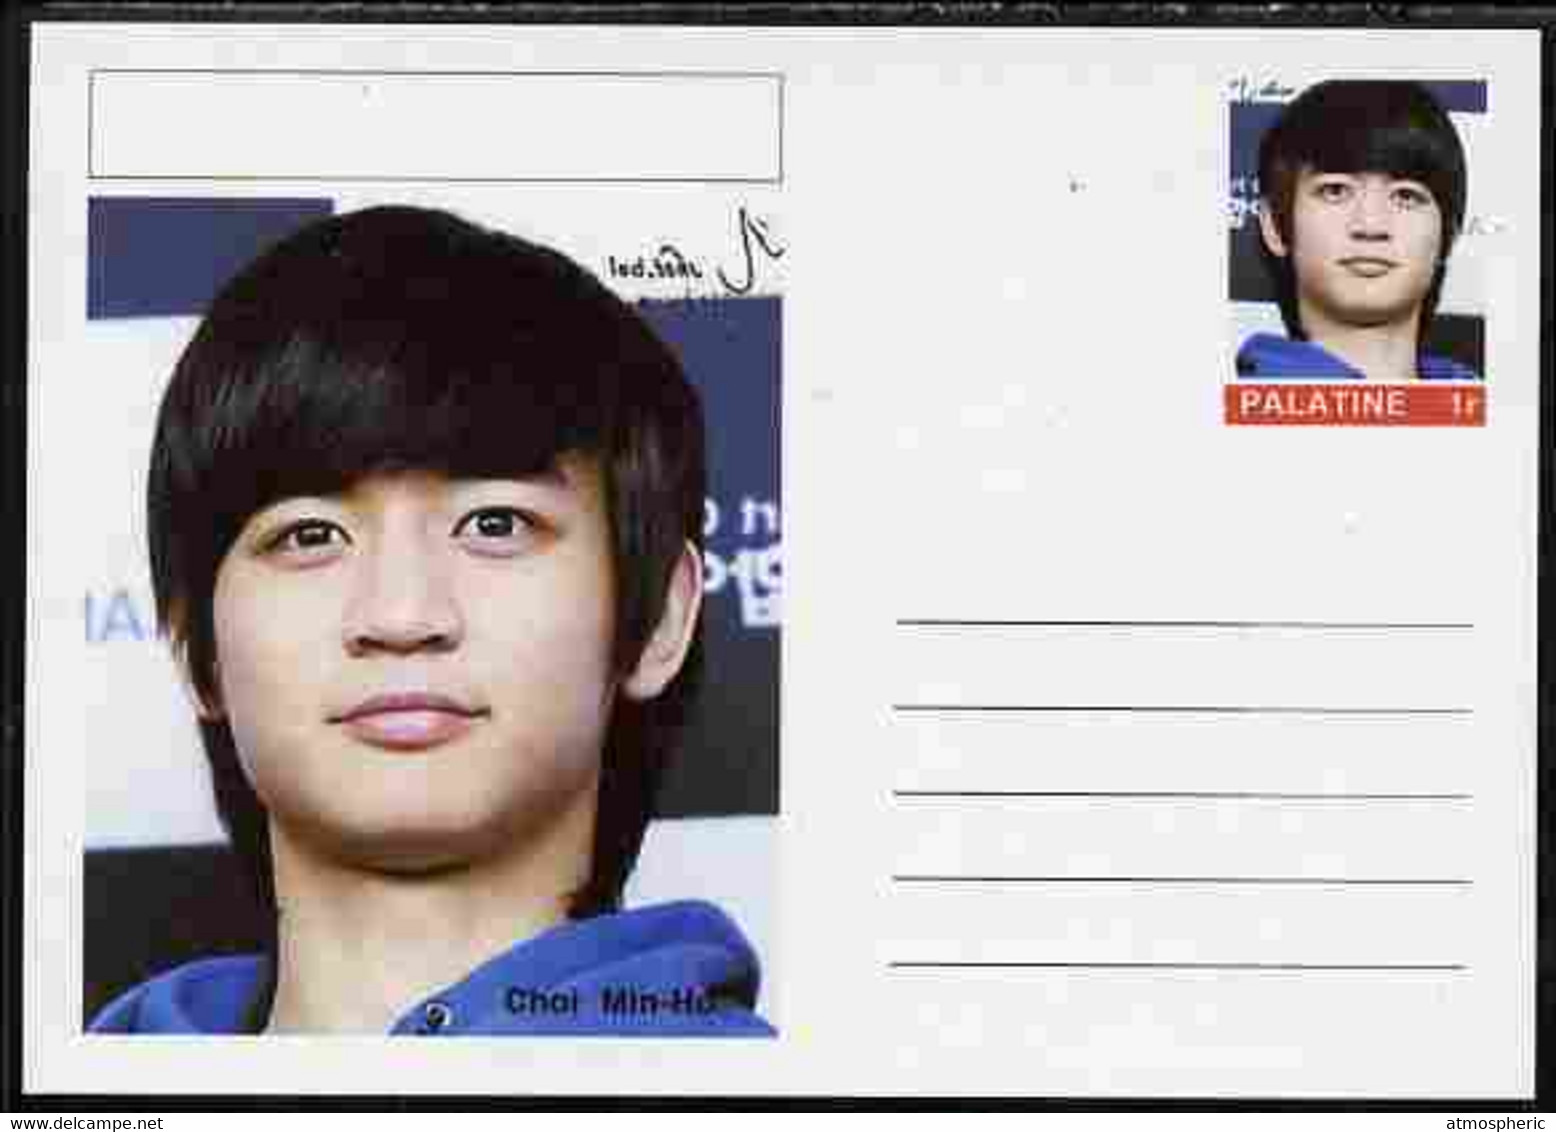 Palatine (Fantasy) Personalities - Choi Min-Ho (judo) Postal Stationery Card Unused And Fine - Martiaux